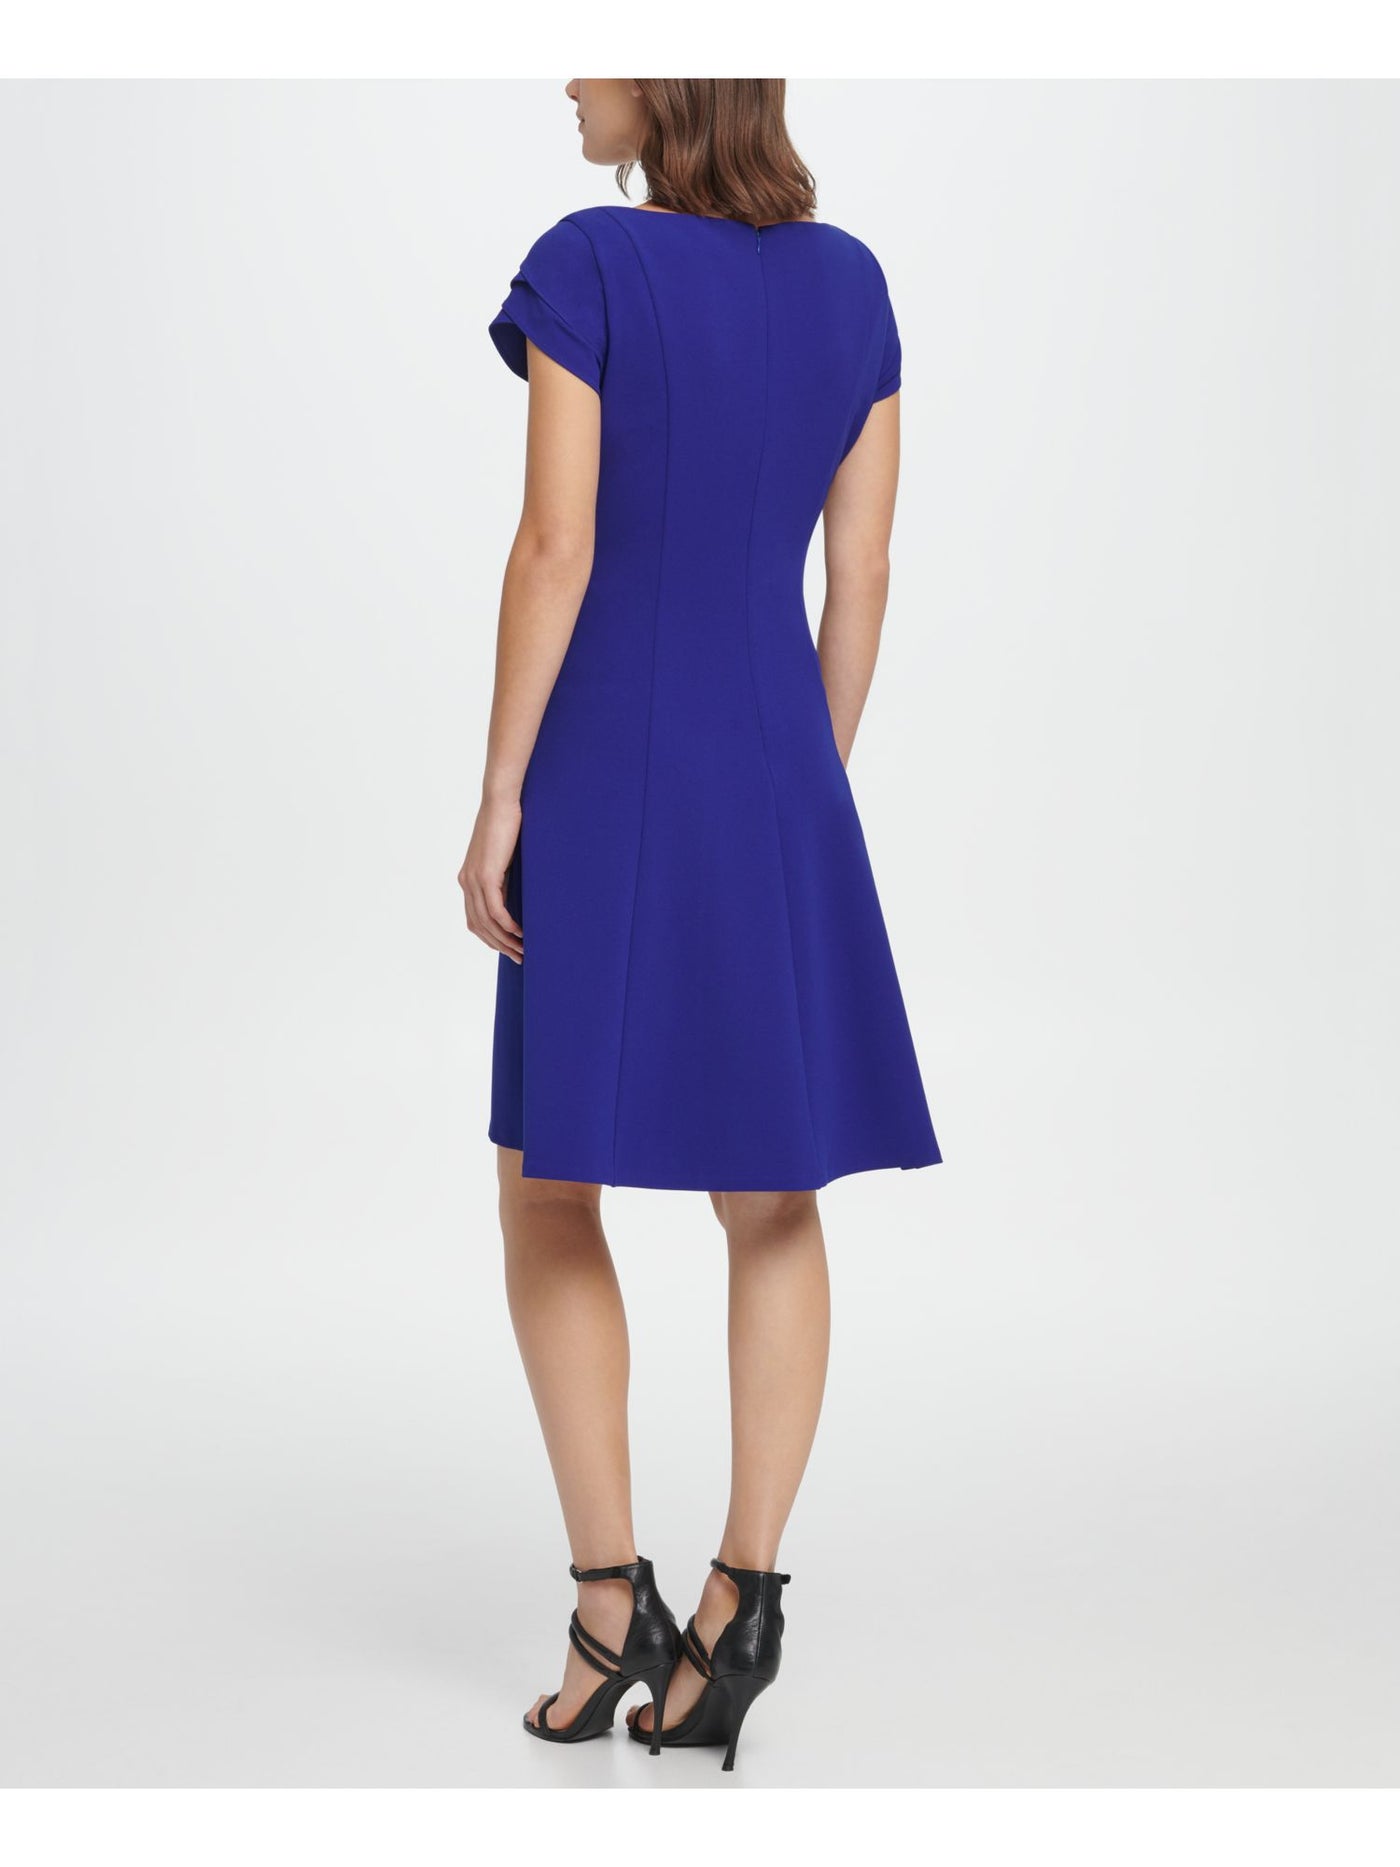 DKNY Womens Blue Flutter Sleeve Jewel Neck Above The Knee Evening Sheath Dress 8